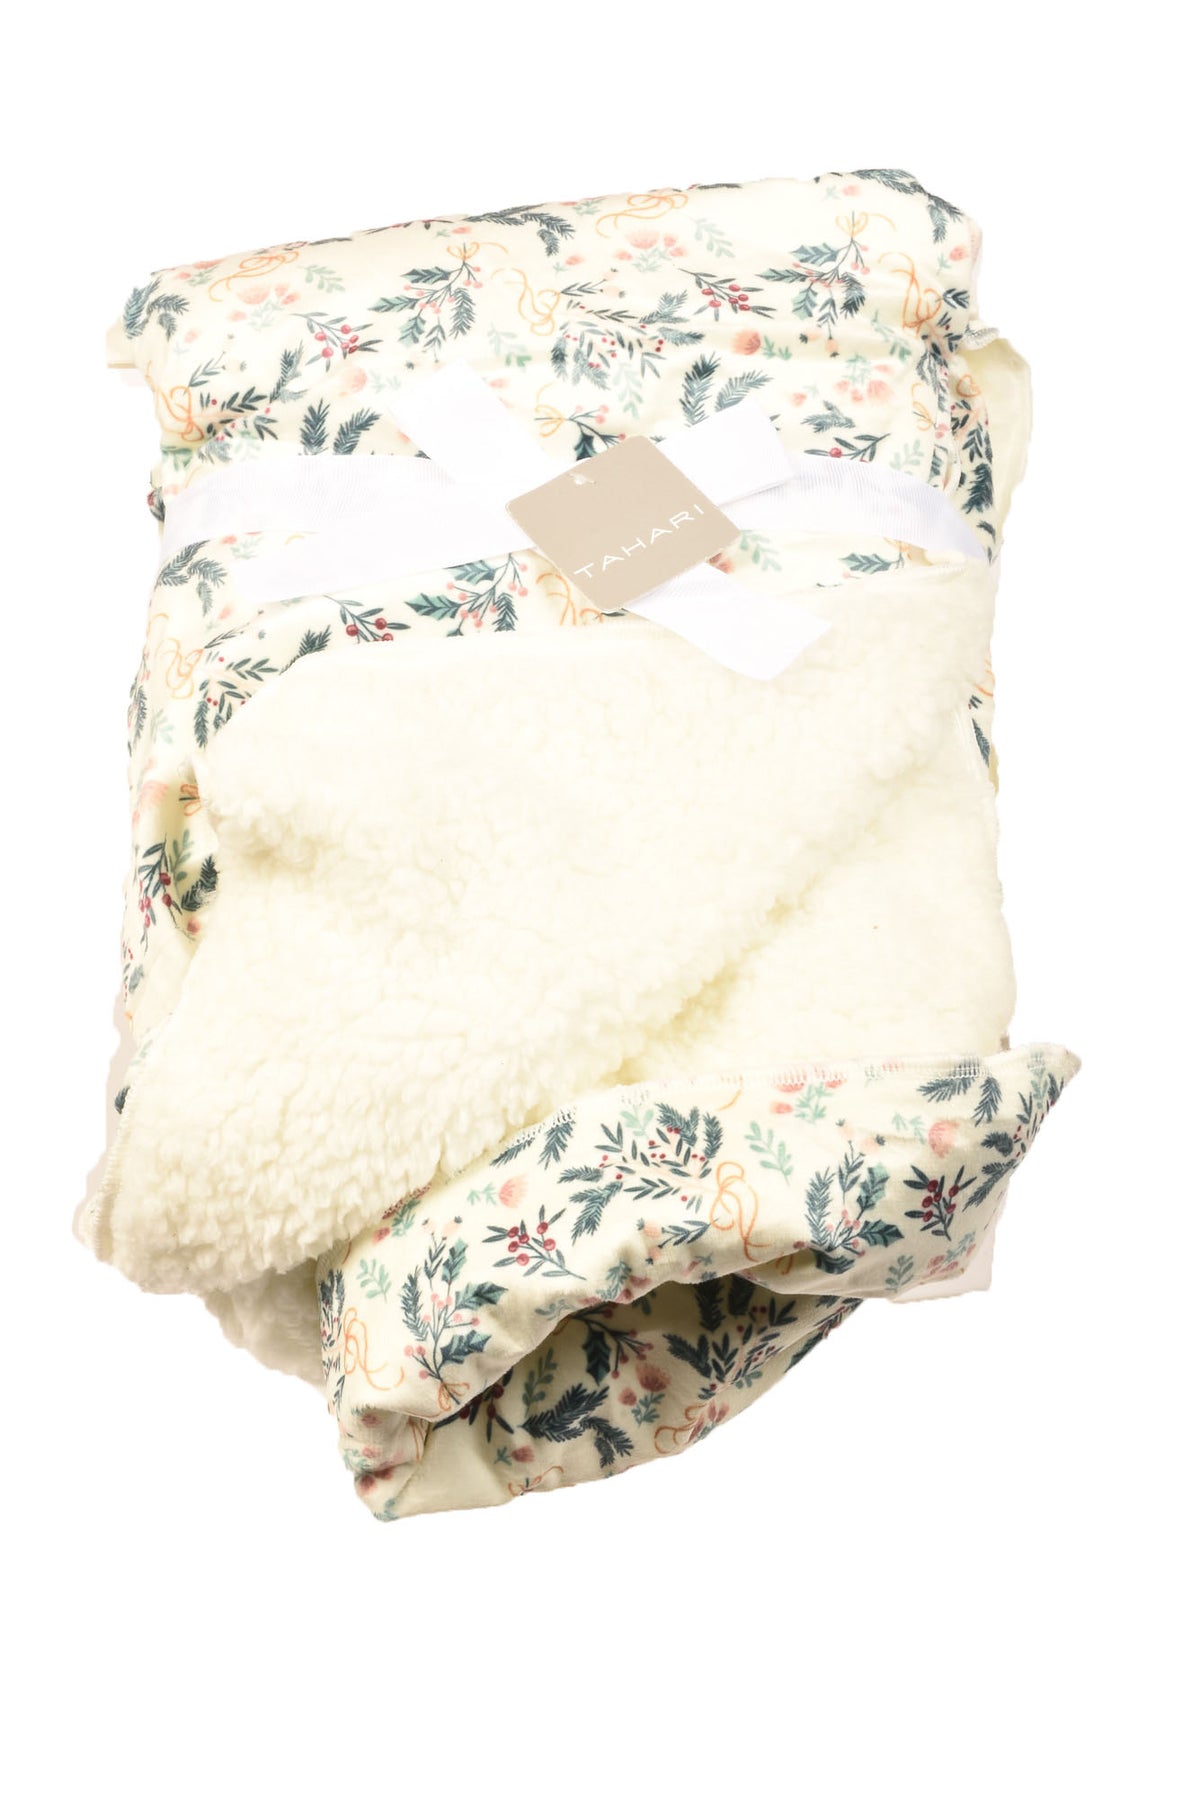 Tahari Infant Blanket